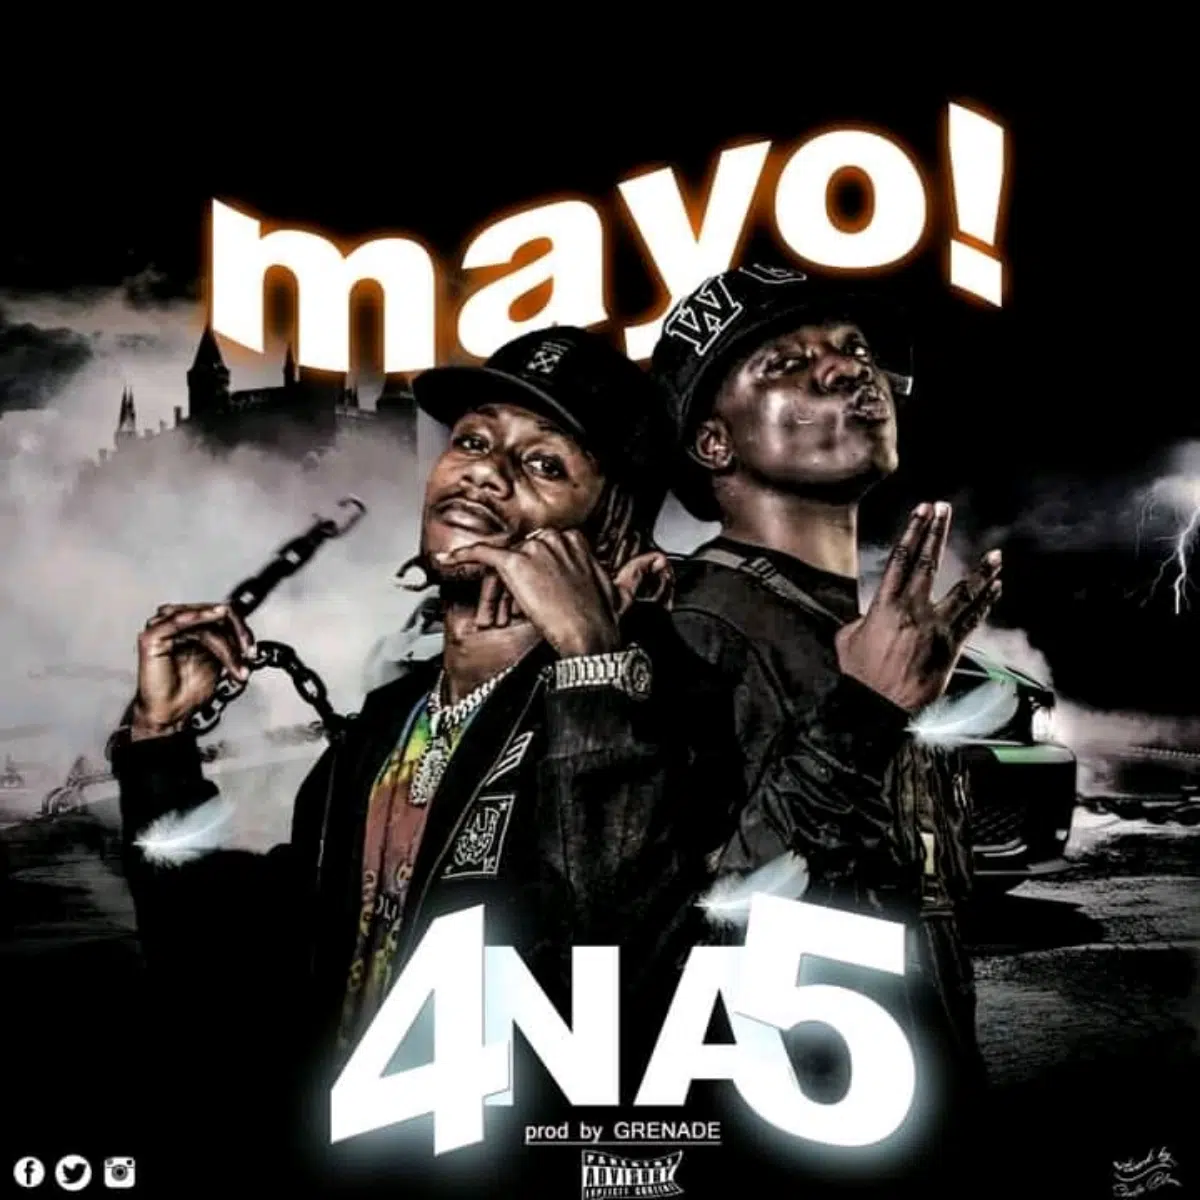 DOWNLOAD: 4 Na 5 – “Mayo!” Mp3